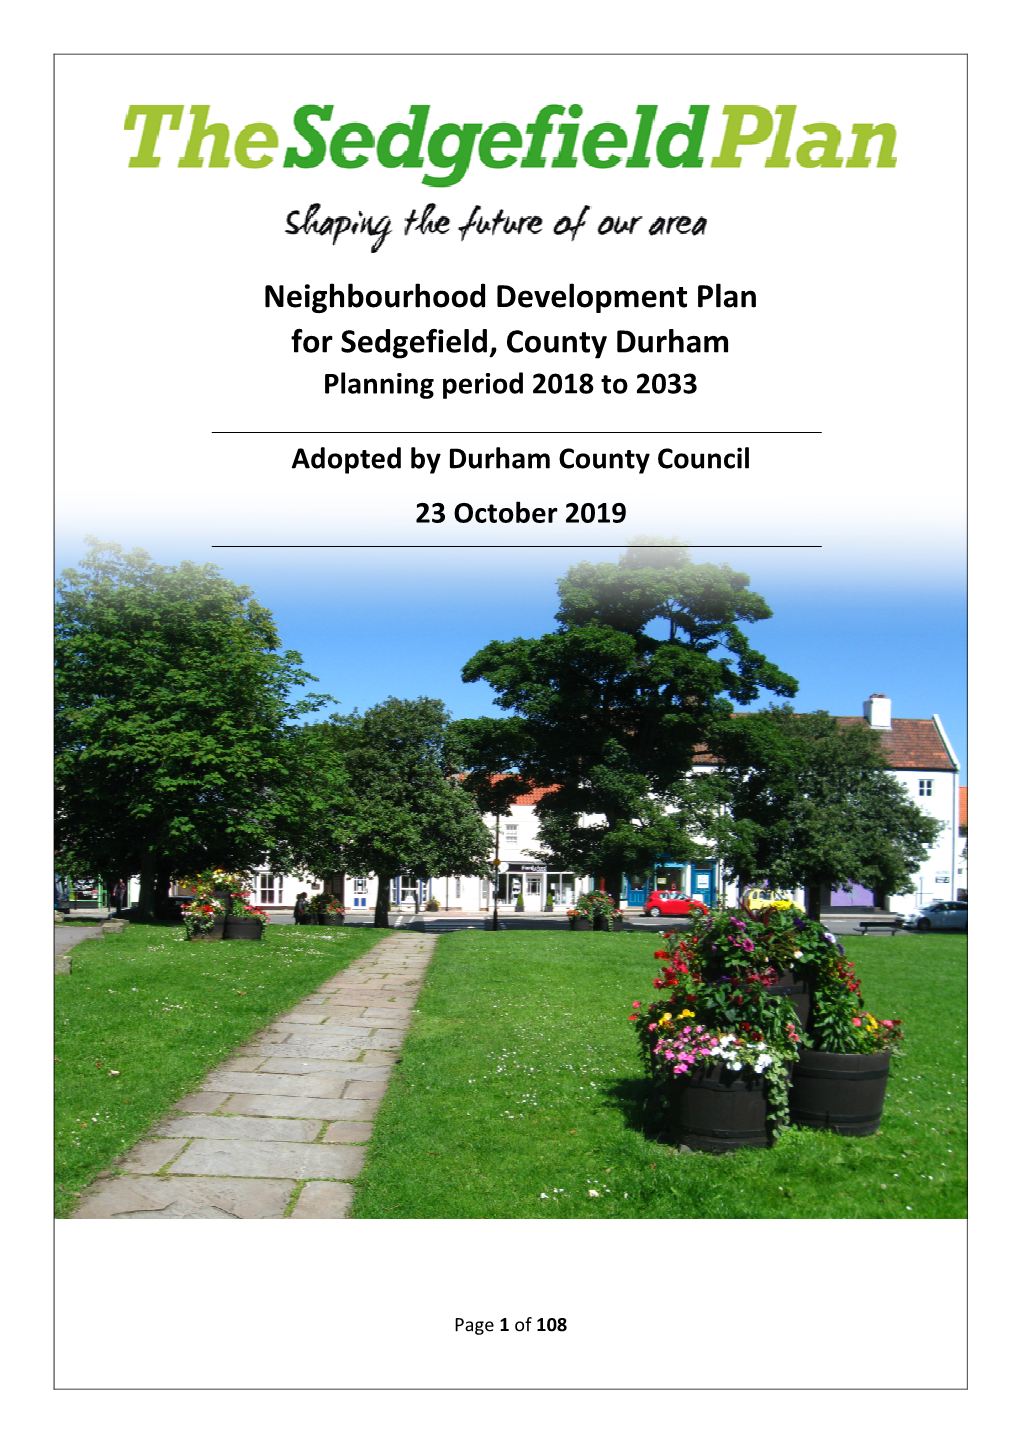 Neighbourhood Development Plan for Sedgefield, County Durham